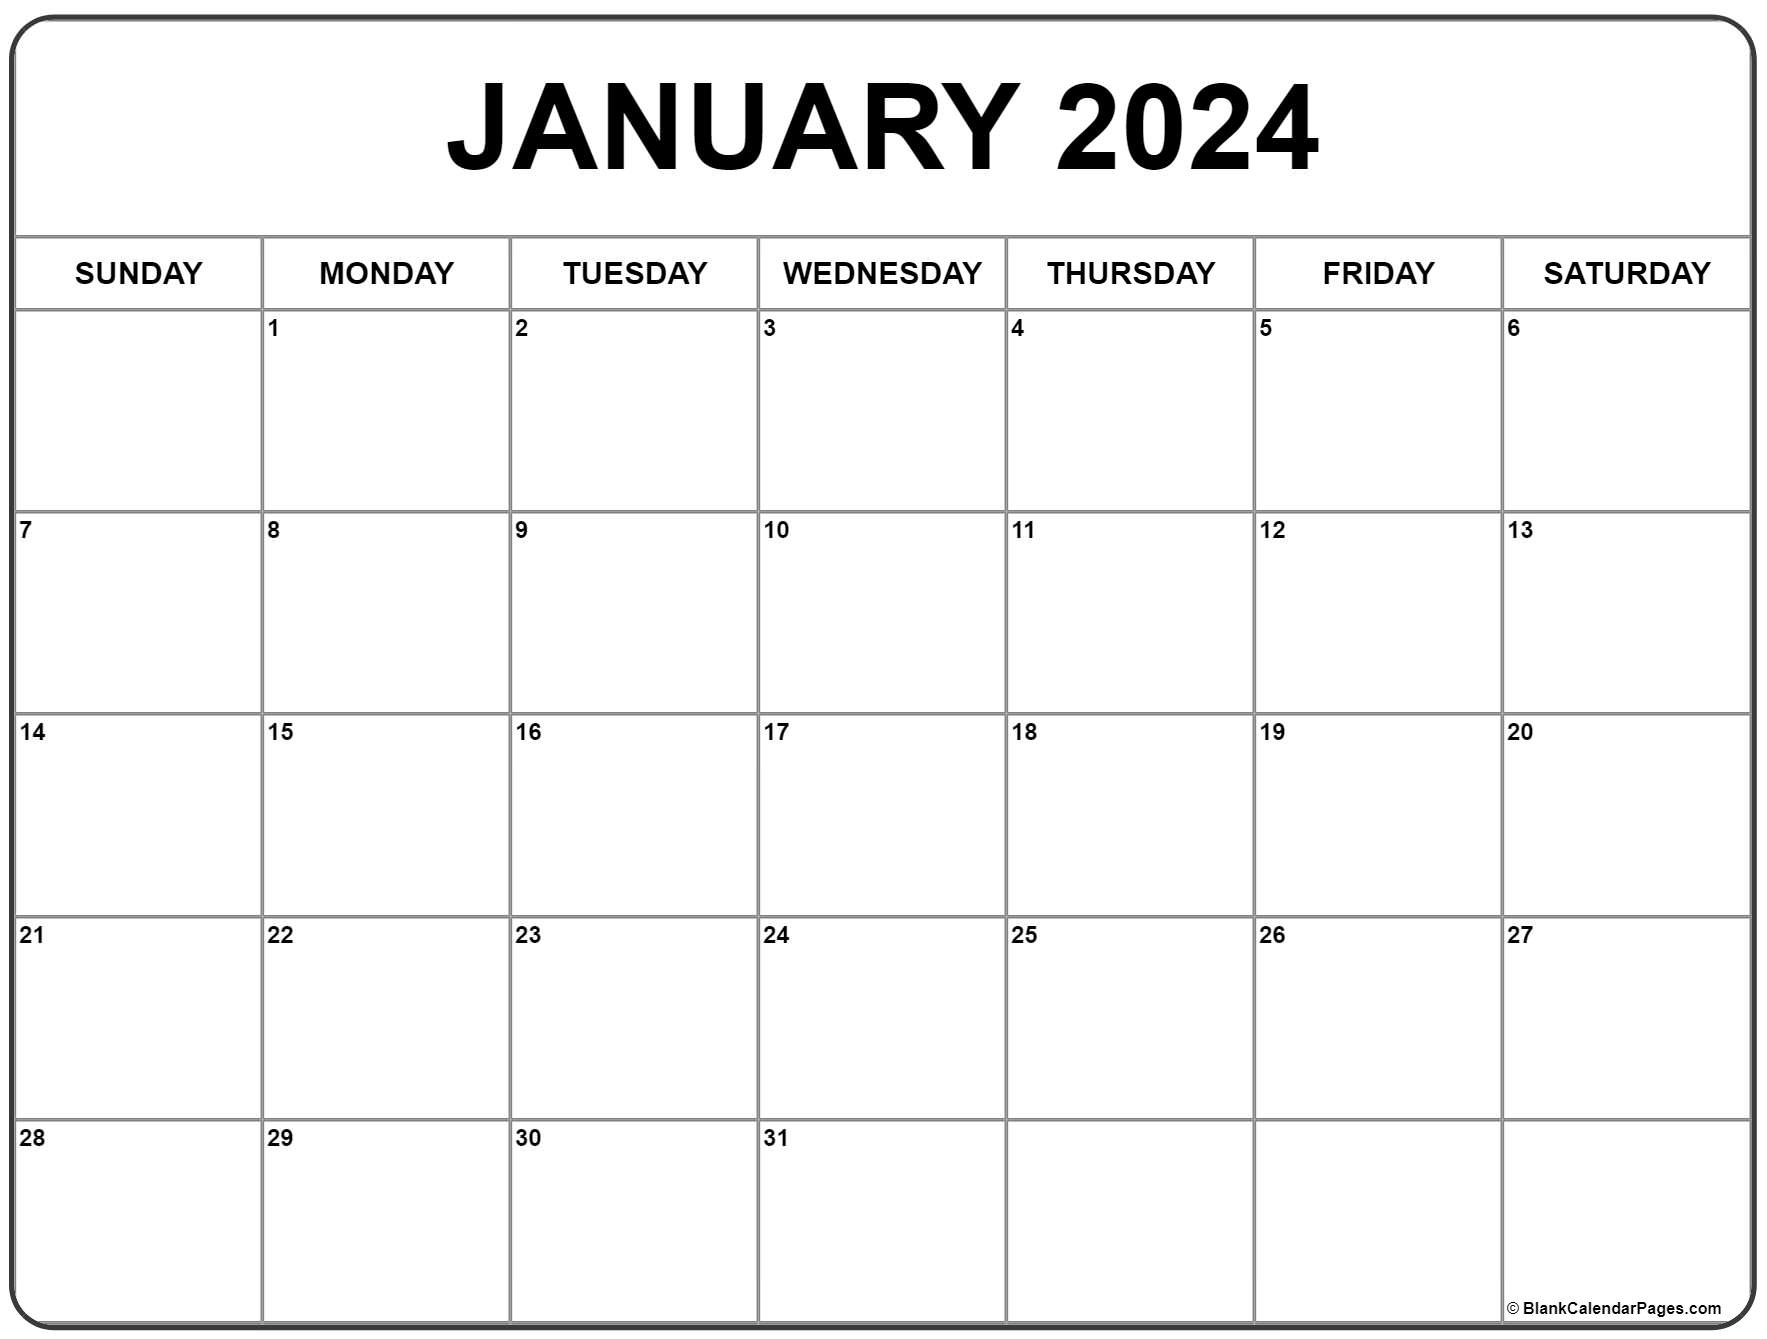 January 2024 Calendar | Free Printable Calendar for Printable Monthly Calendar Jan 2024